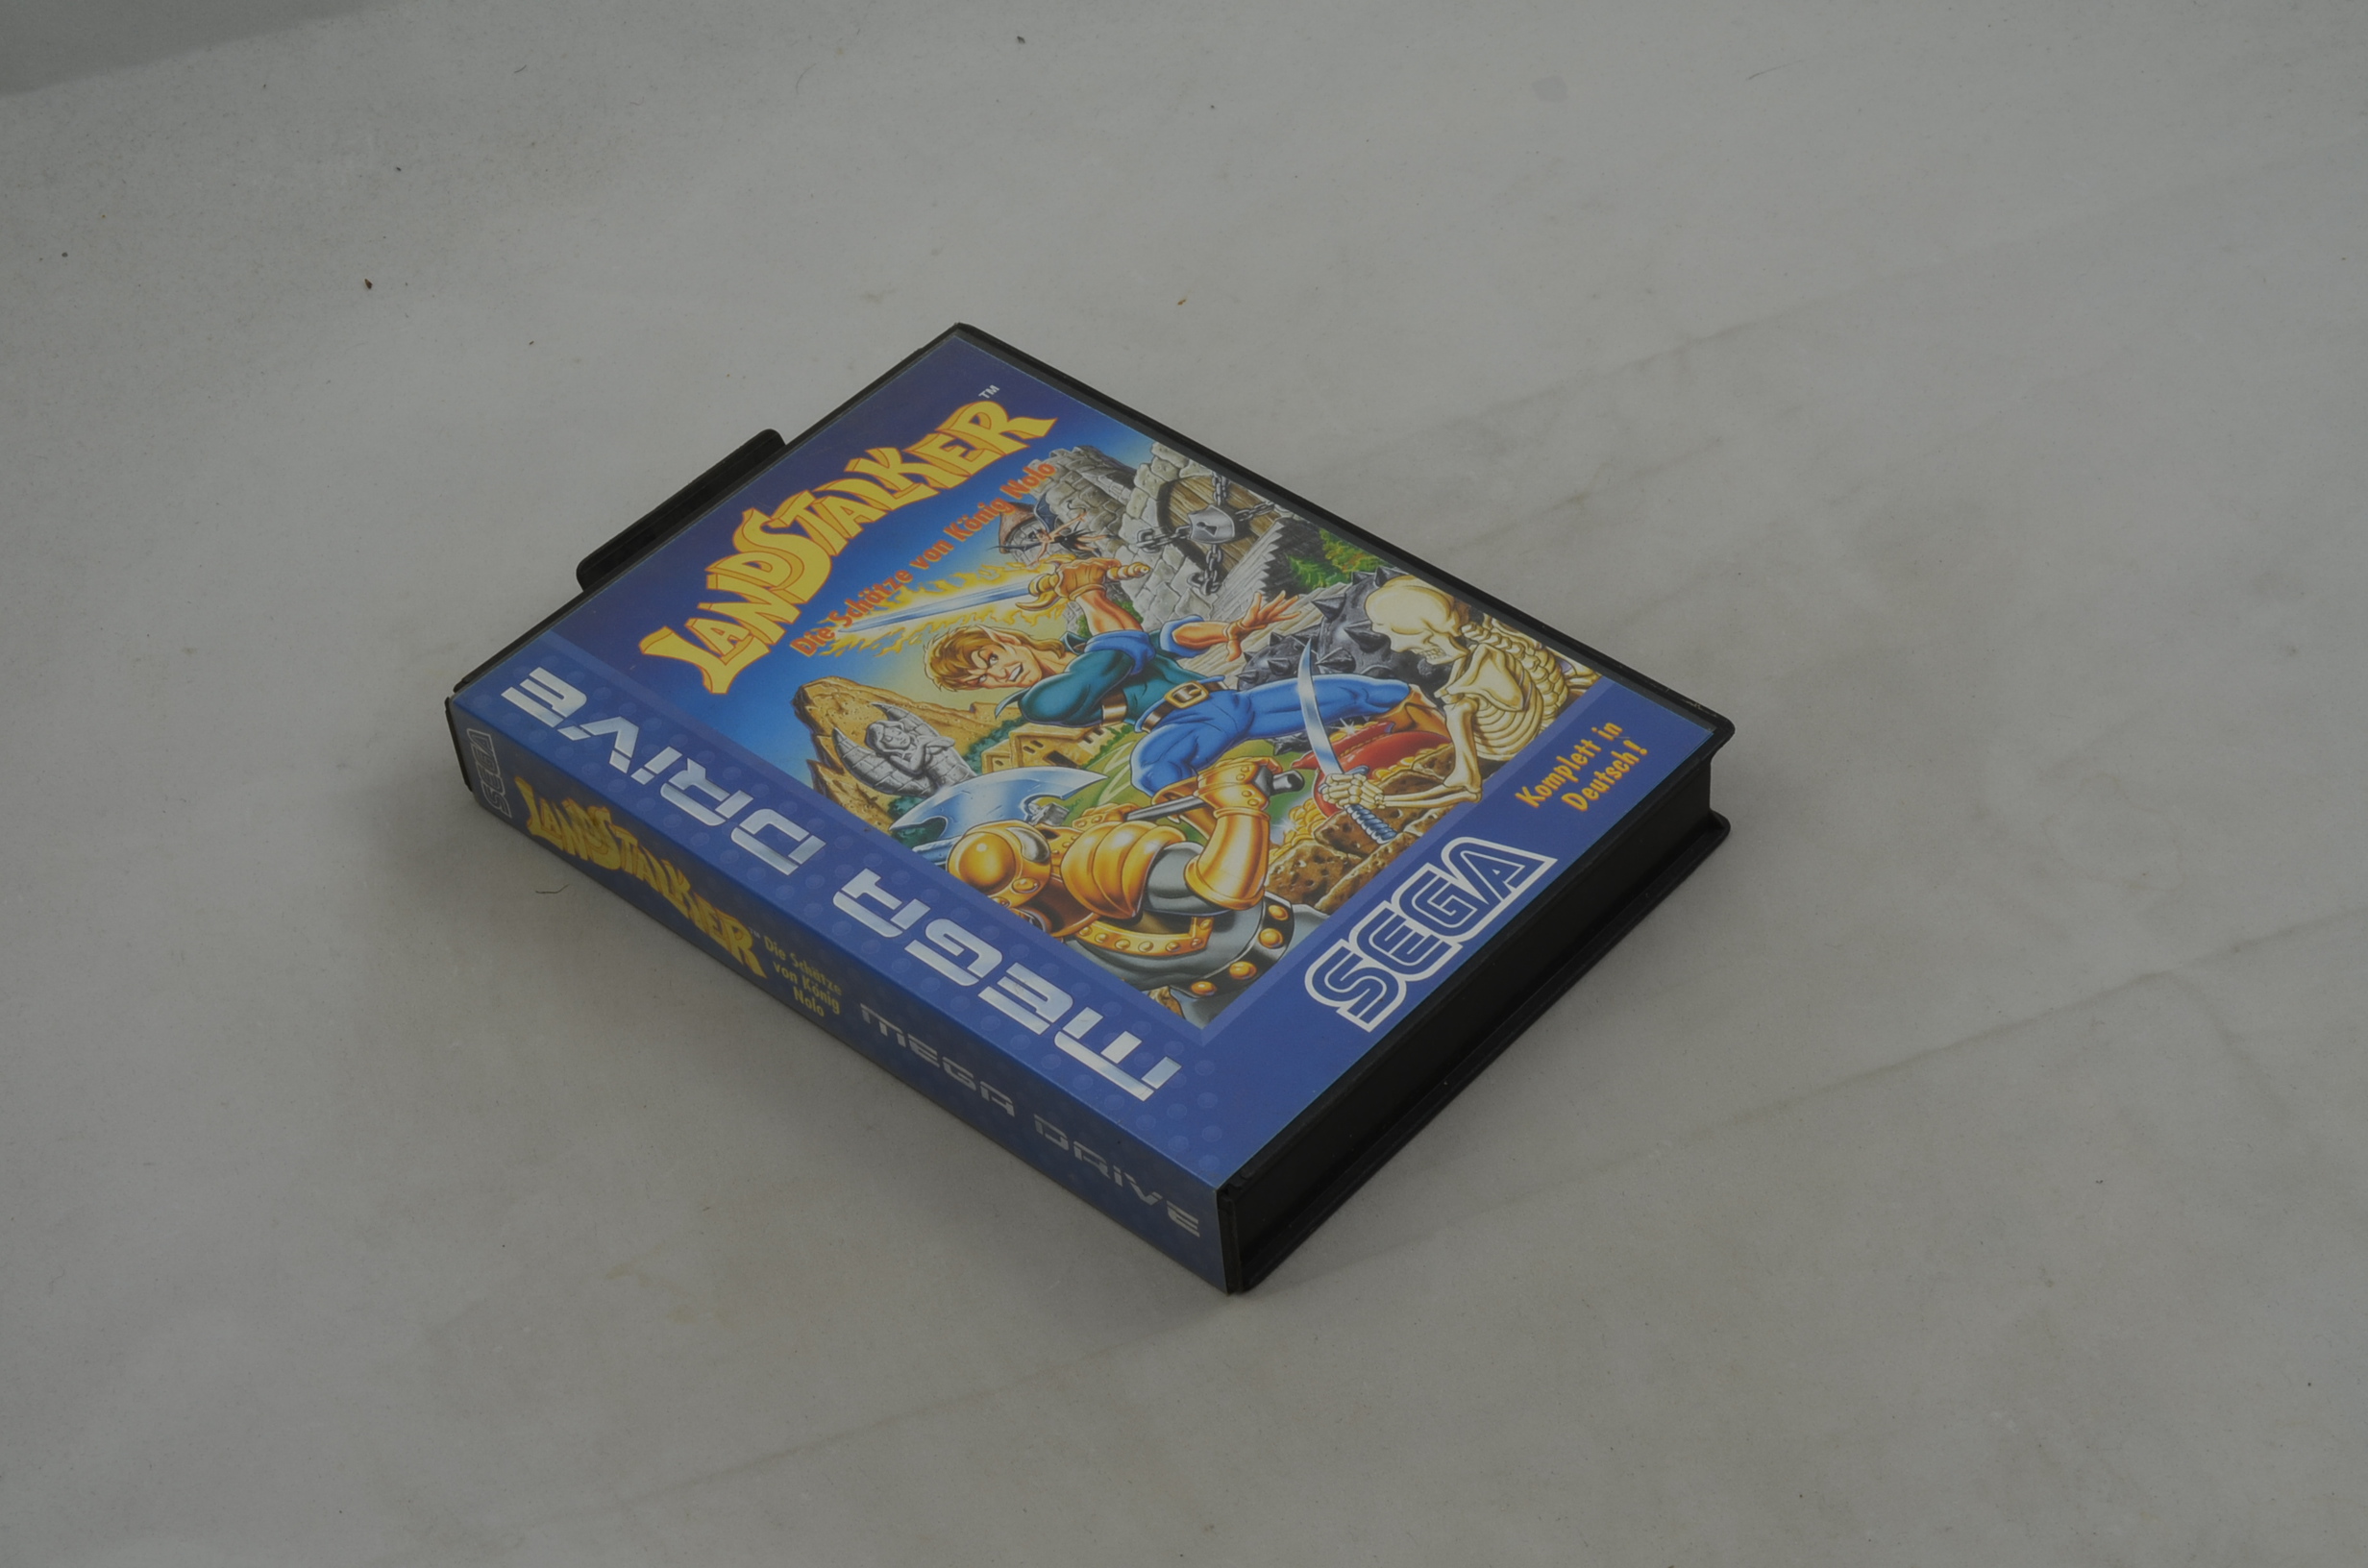 Produktbild von Landstalker Sega Mega Drive Spiel CB